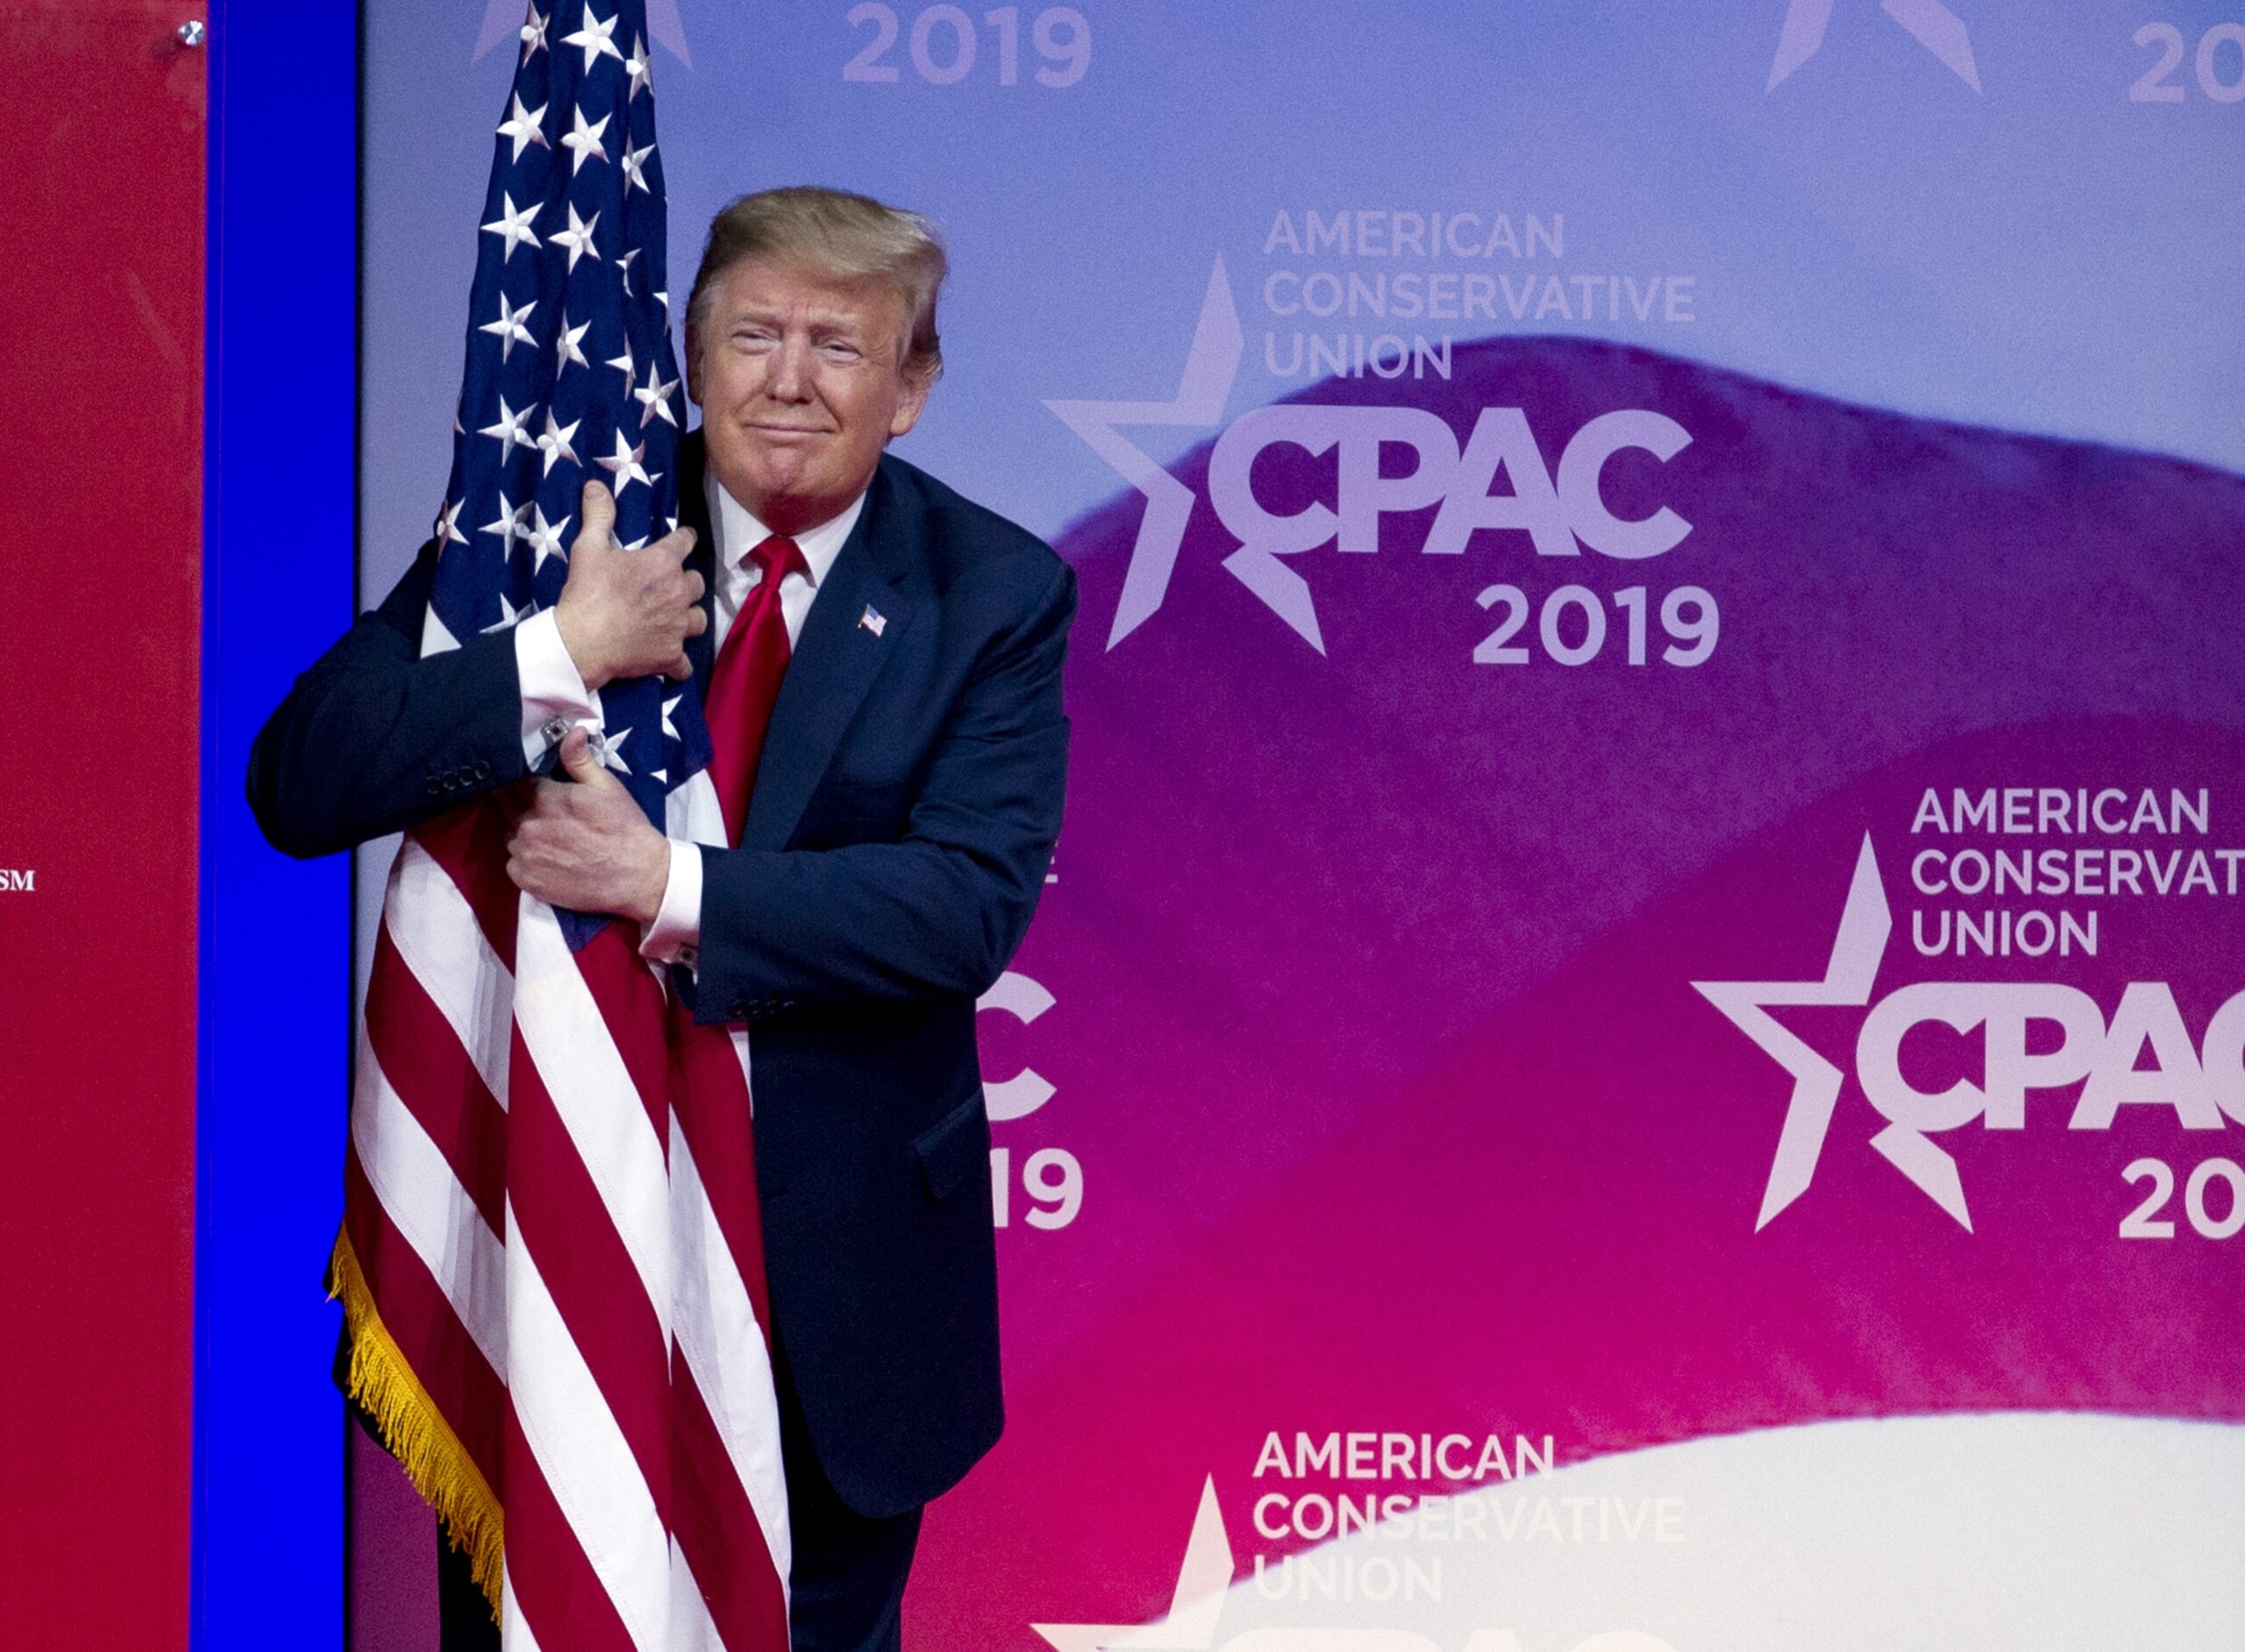 President Trump hugging a flag